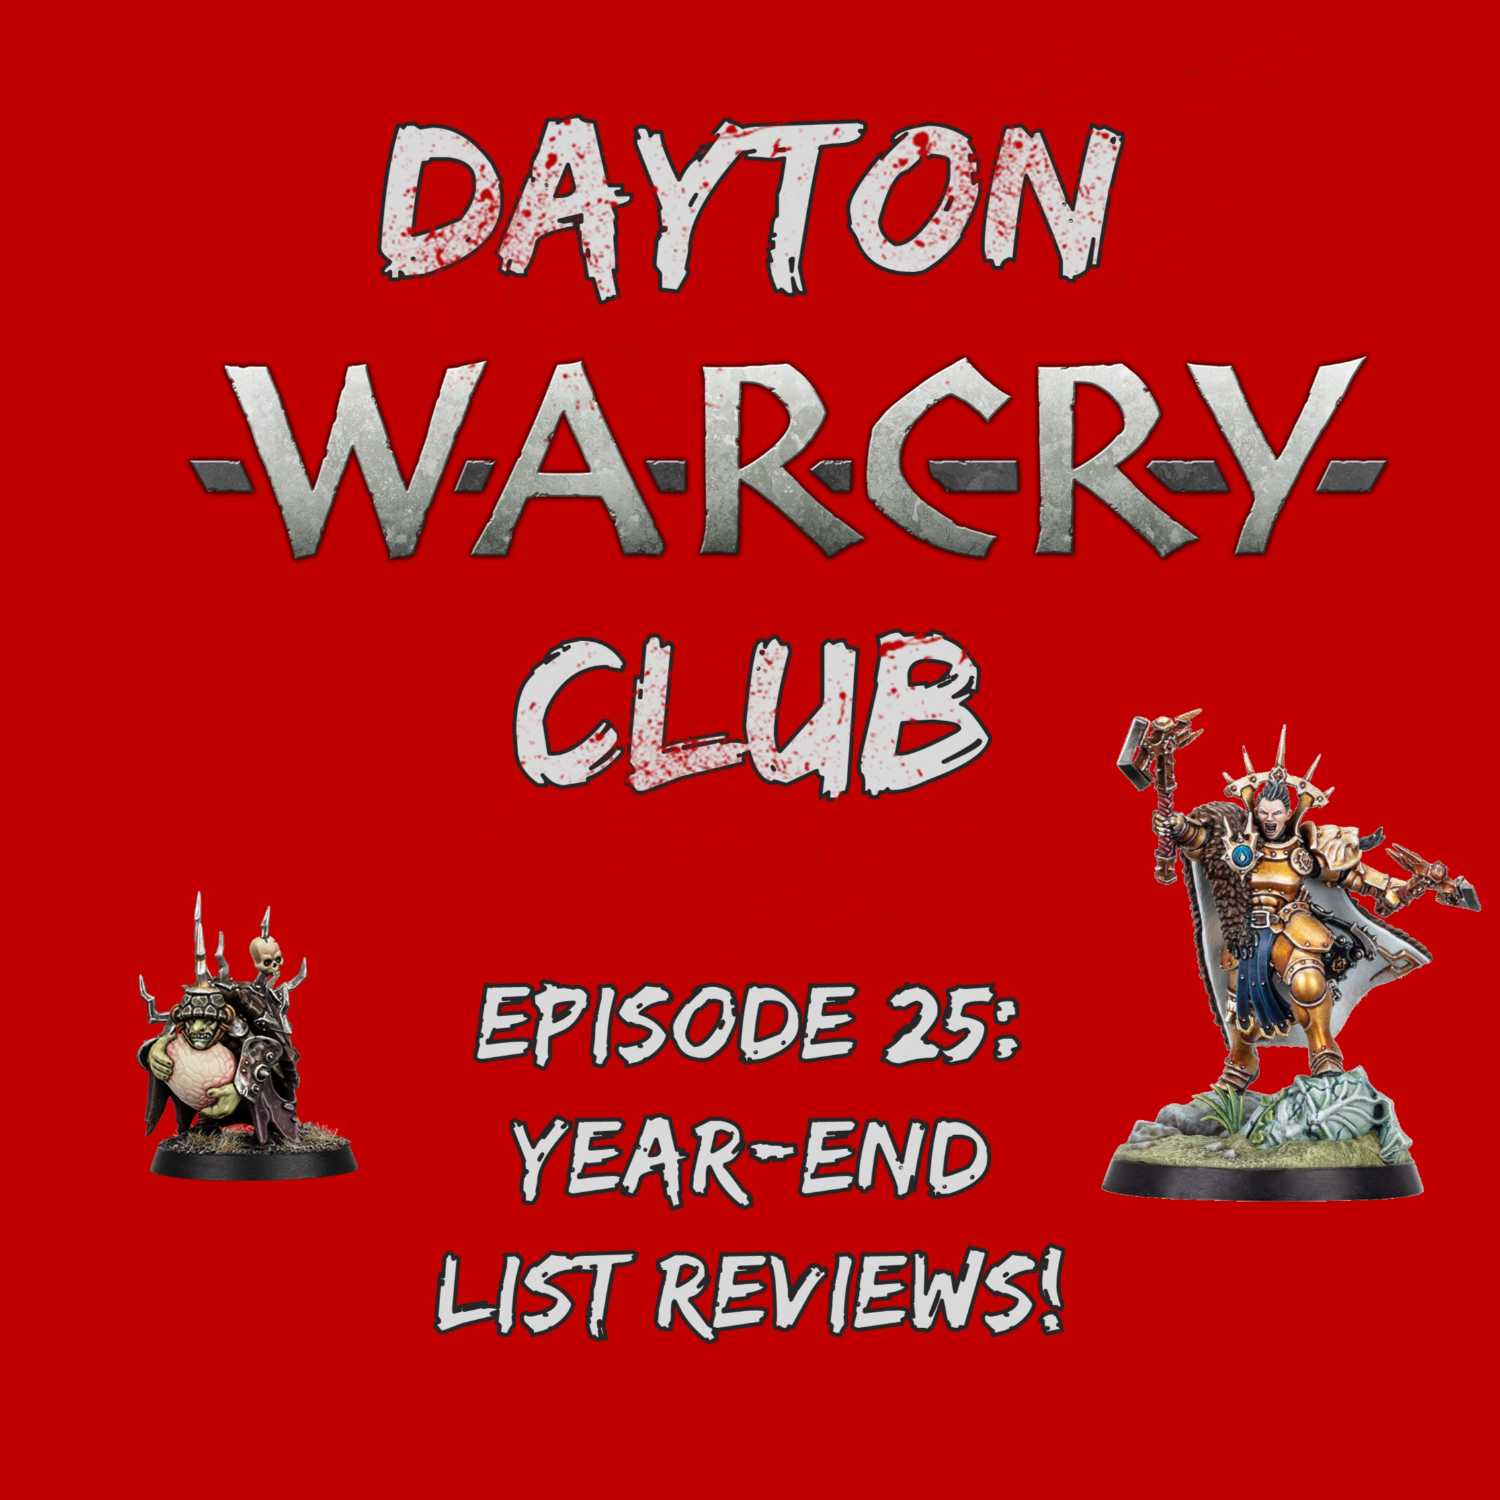 Dayton Warcry Club Episode 25: Year-End List Reviews!